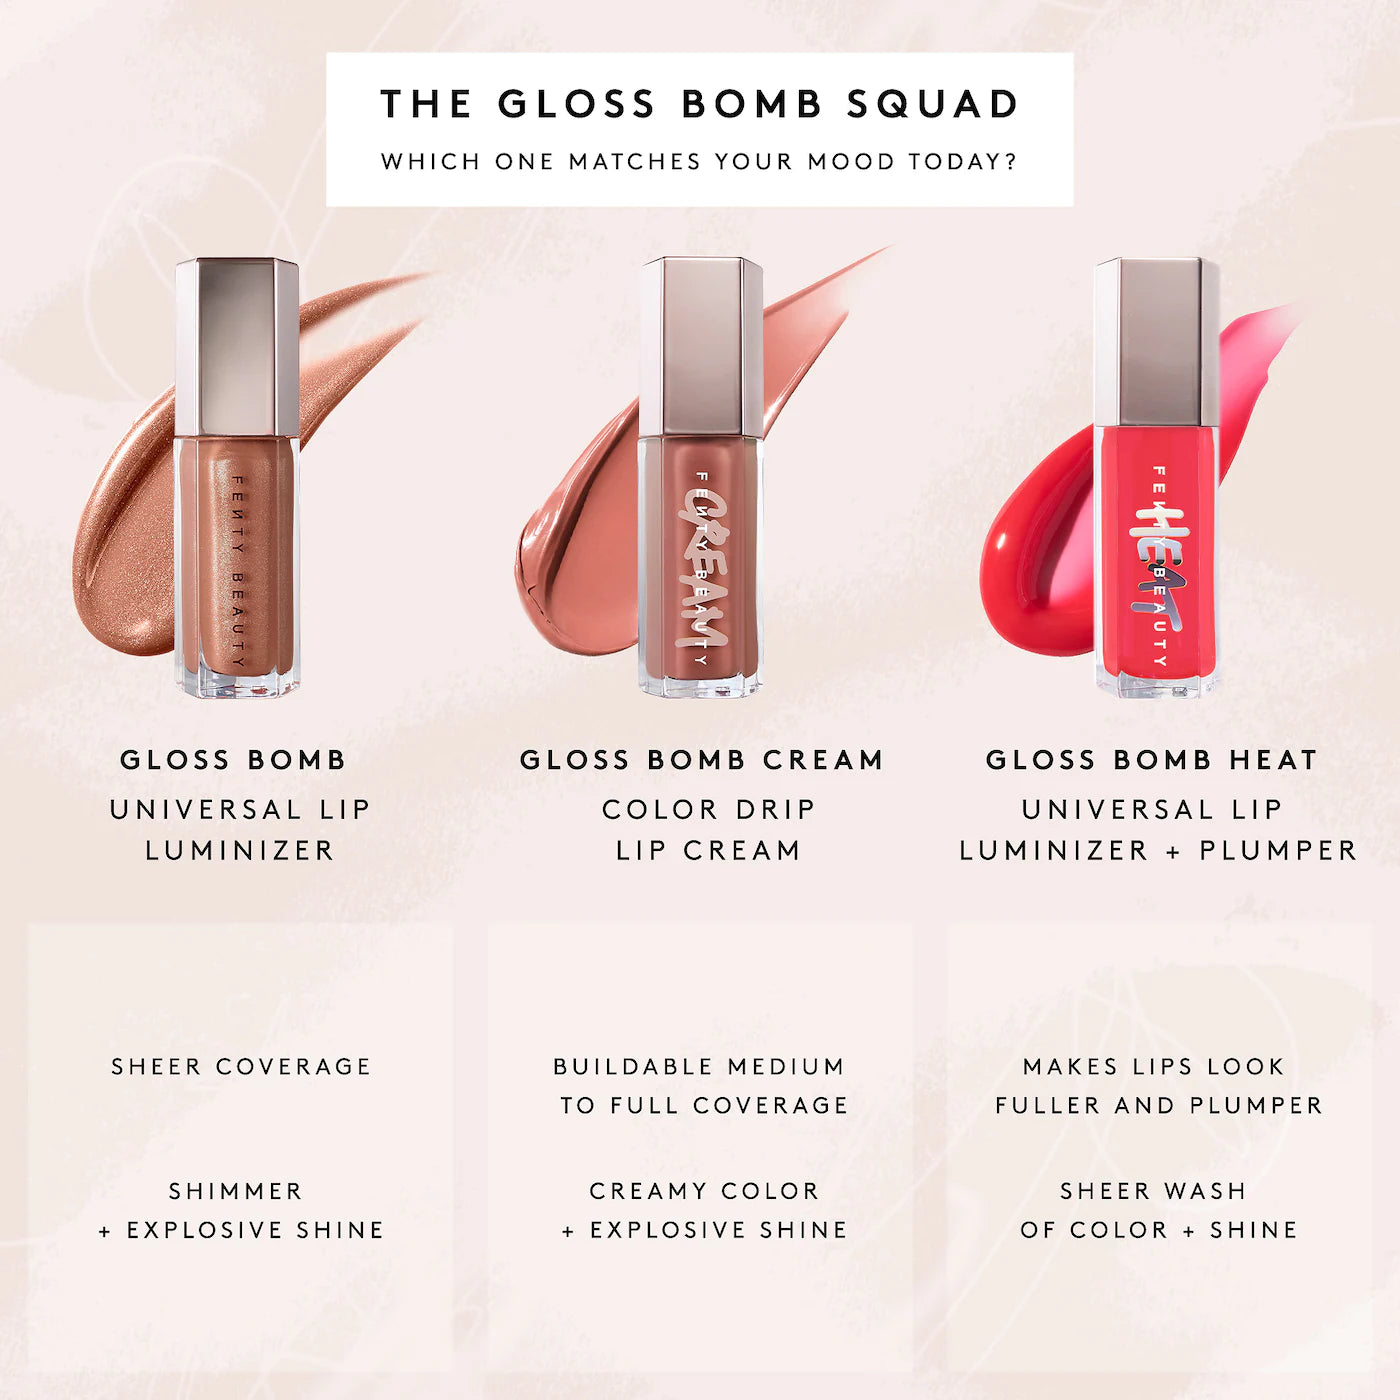 Fenty Beauty - Gloss Bomb Heat Universal Lip Luminizer + Plumper